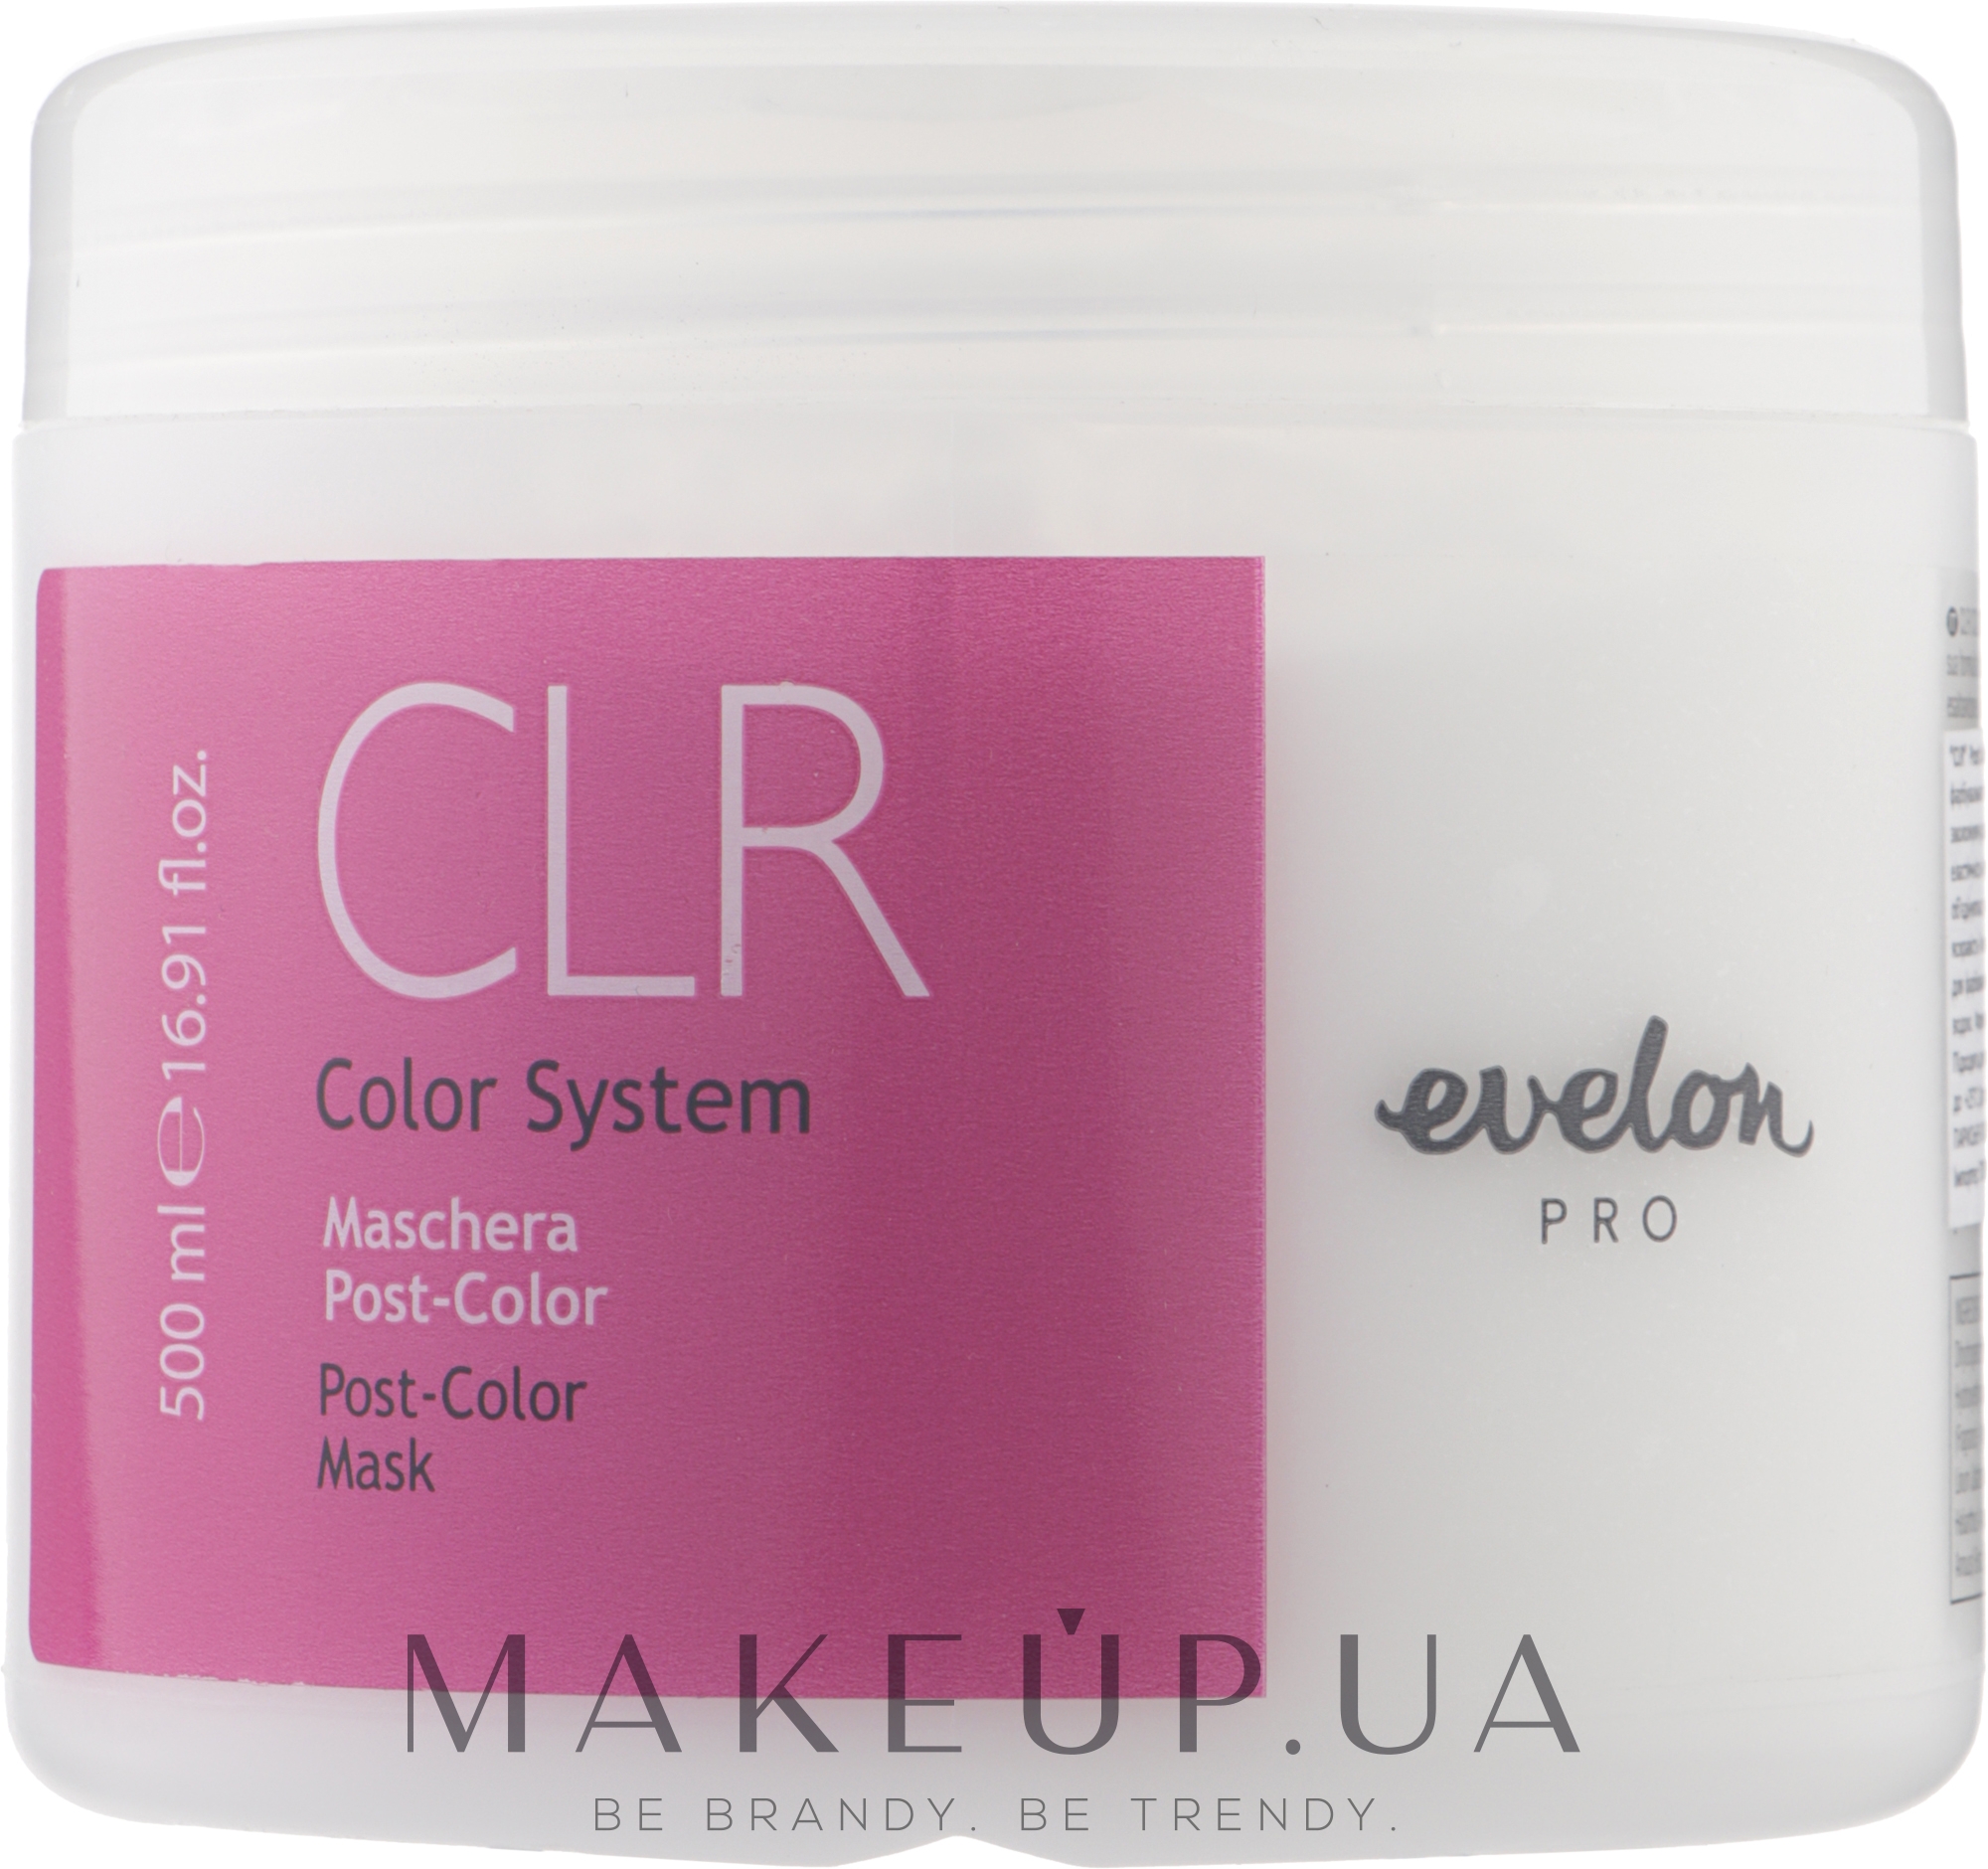 Маска для окрашенных волос - Parisienne Evelon Pro Color System Post Color Mask — фото 500ml